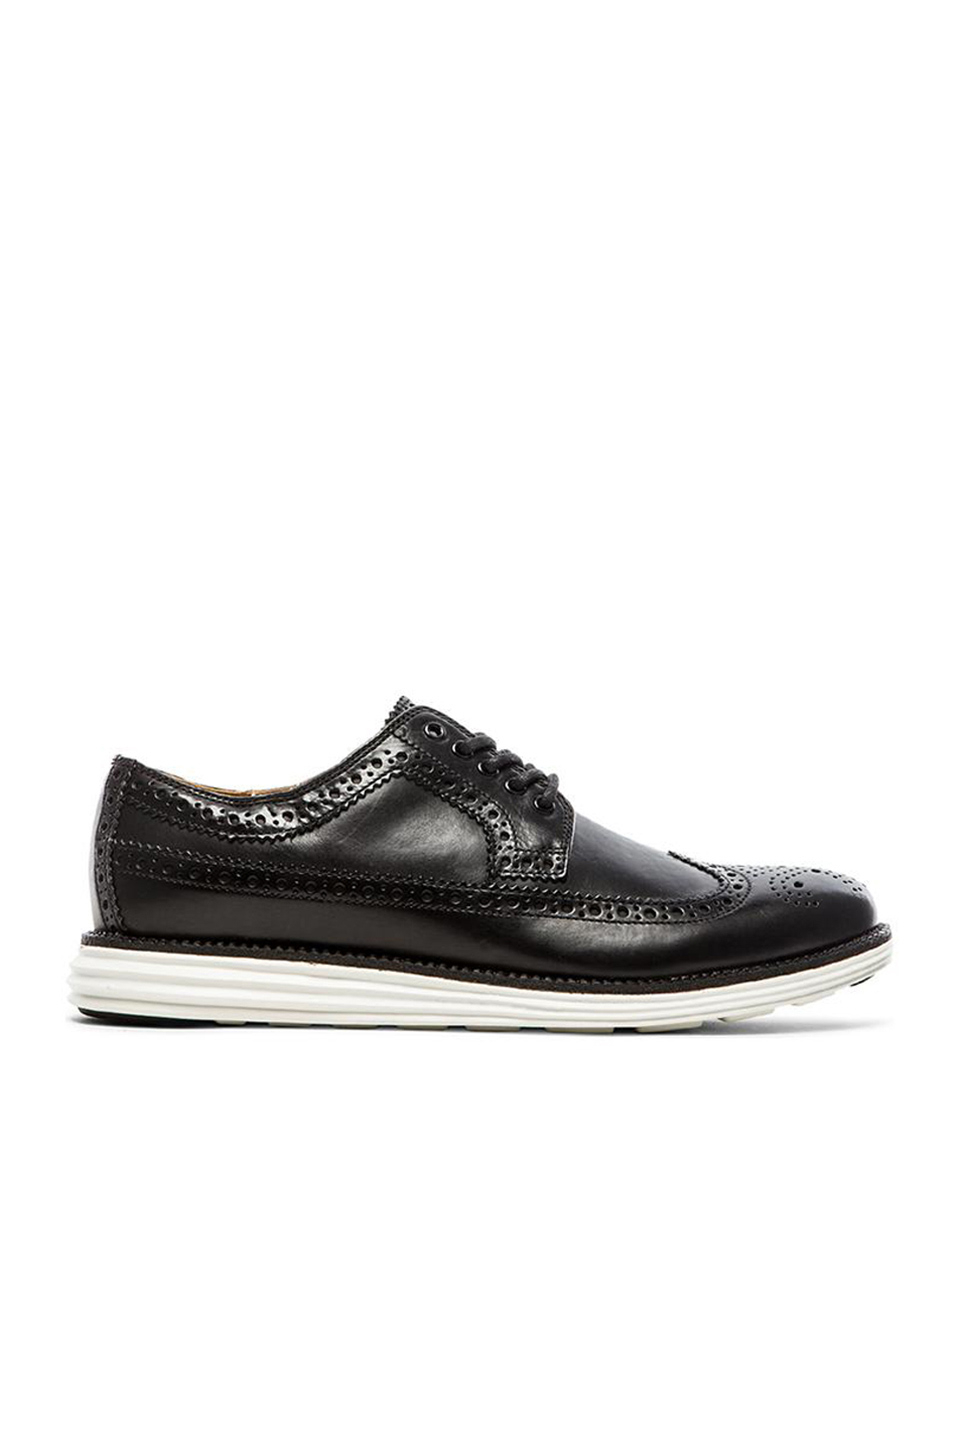 Lyst - Cole haan Lunargrand Long Wingtip Shoes in Black for Men